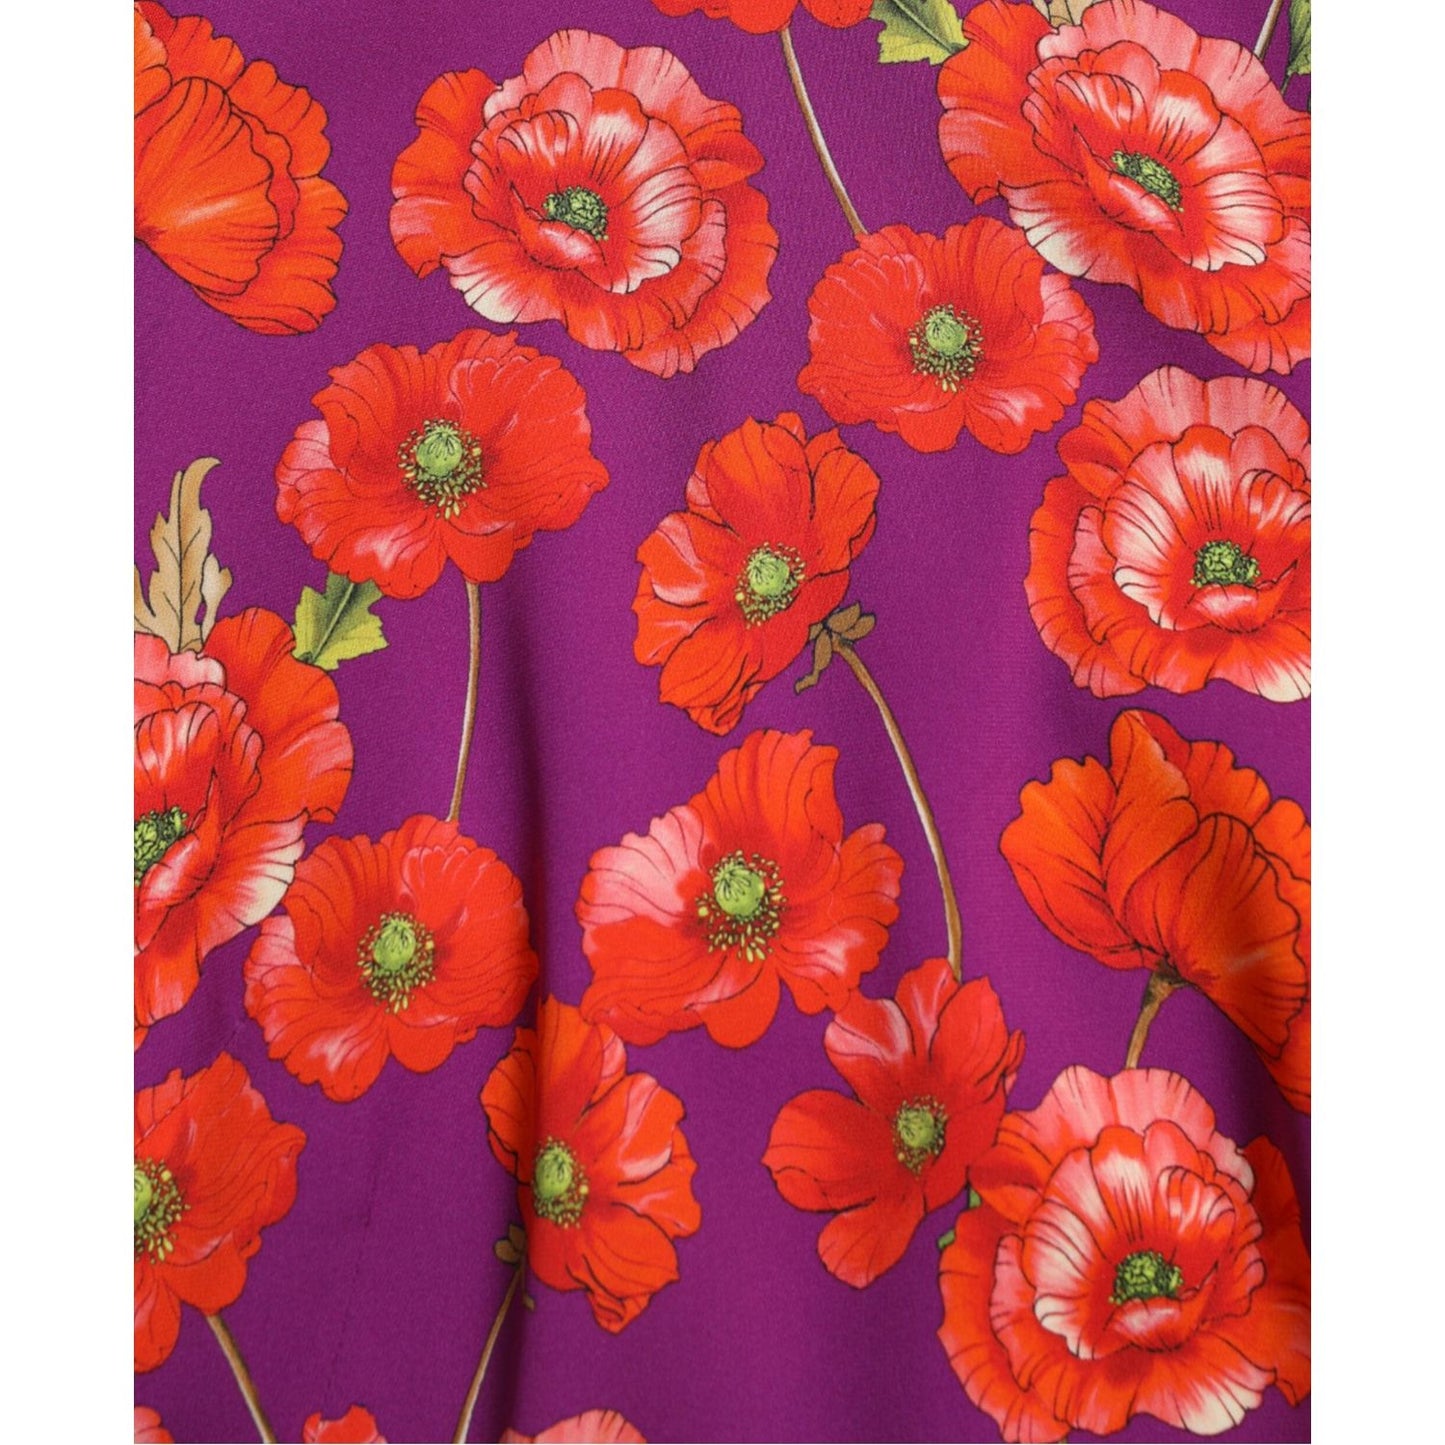 Dolce & Gabbana Vibrant Floral Silk Charmeuse Dress multicolor-floral-poppy-print-sheath-dress